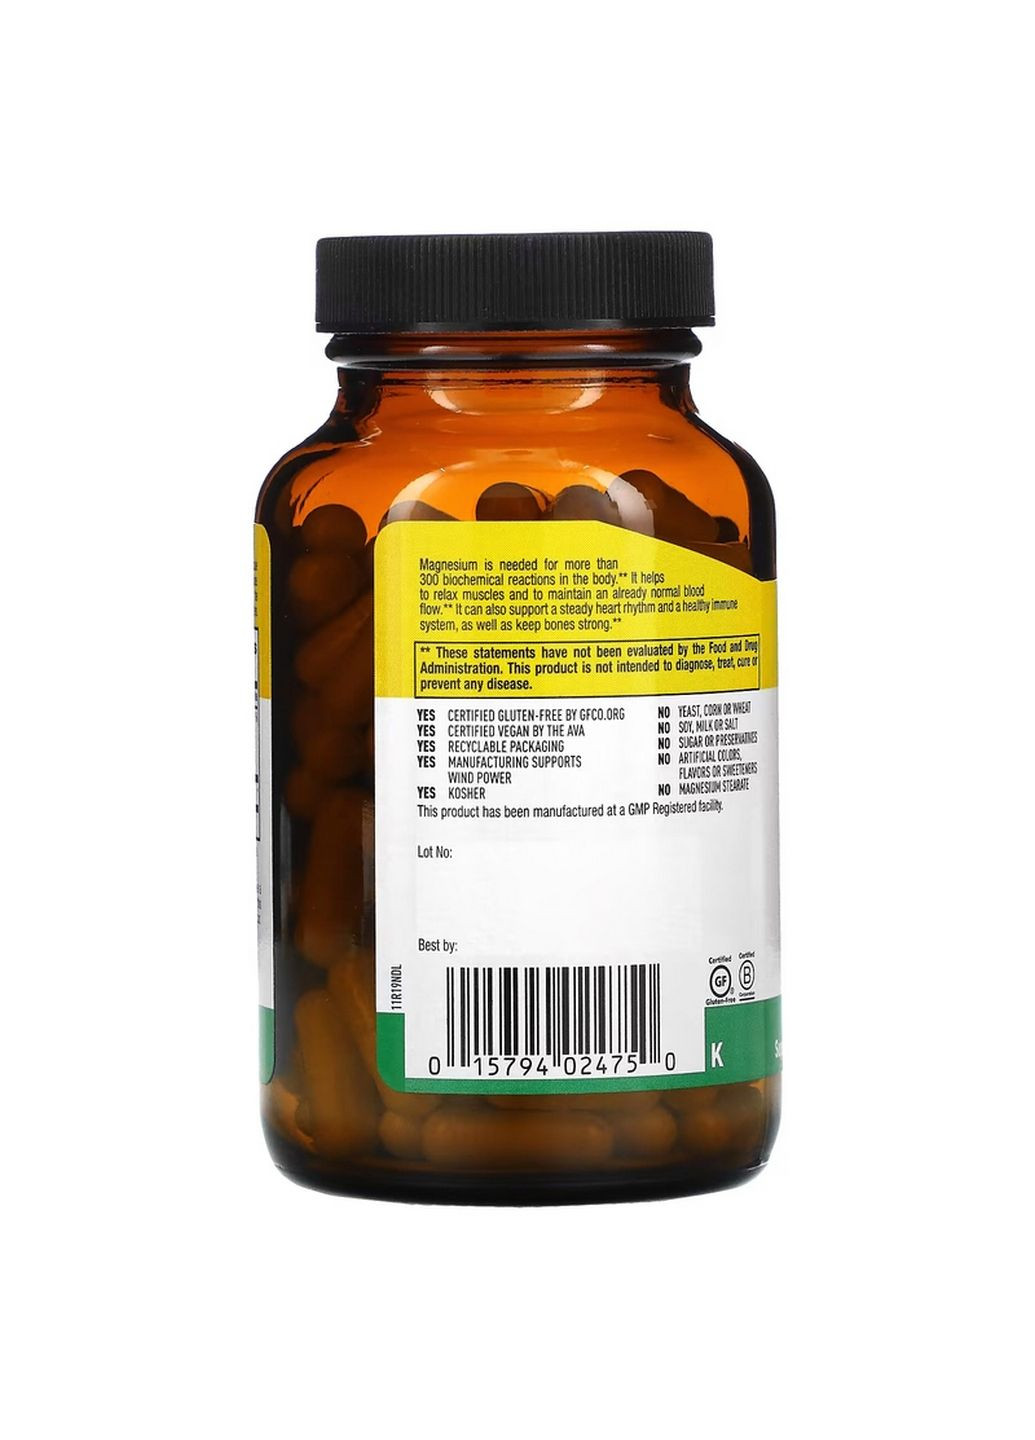 Вітаміни та мінерали Target-Mins Magnesium Caps with Silica 300 mg, 120 вегакапсул Country Life (293479016)